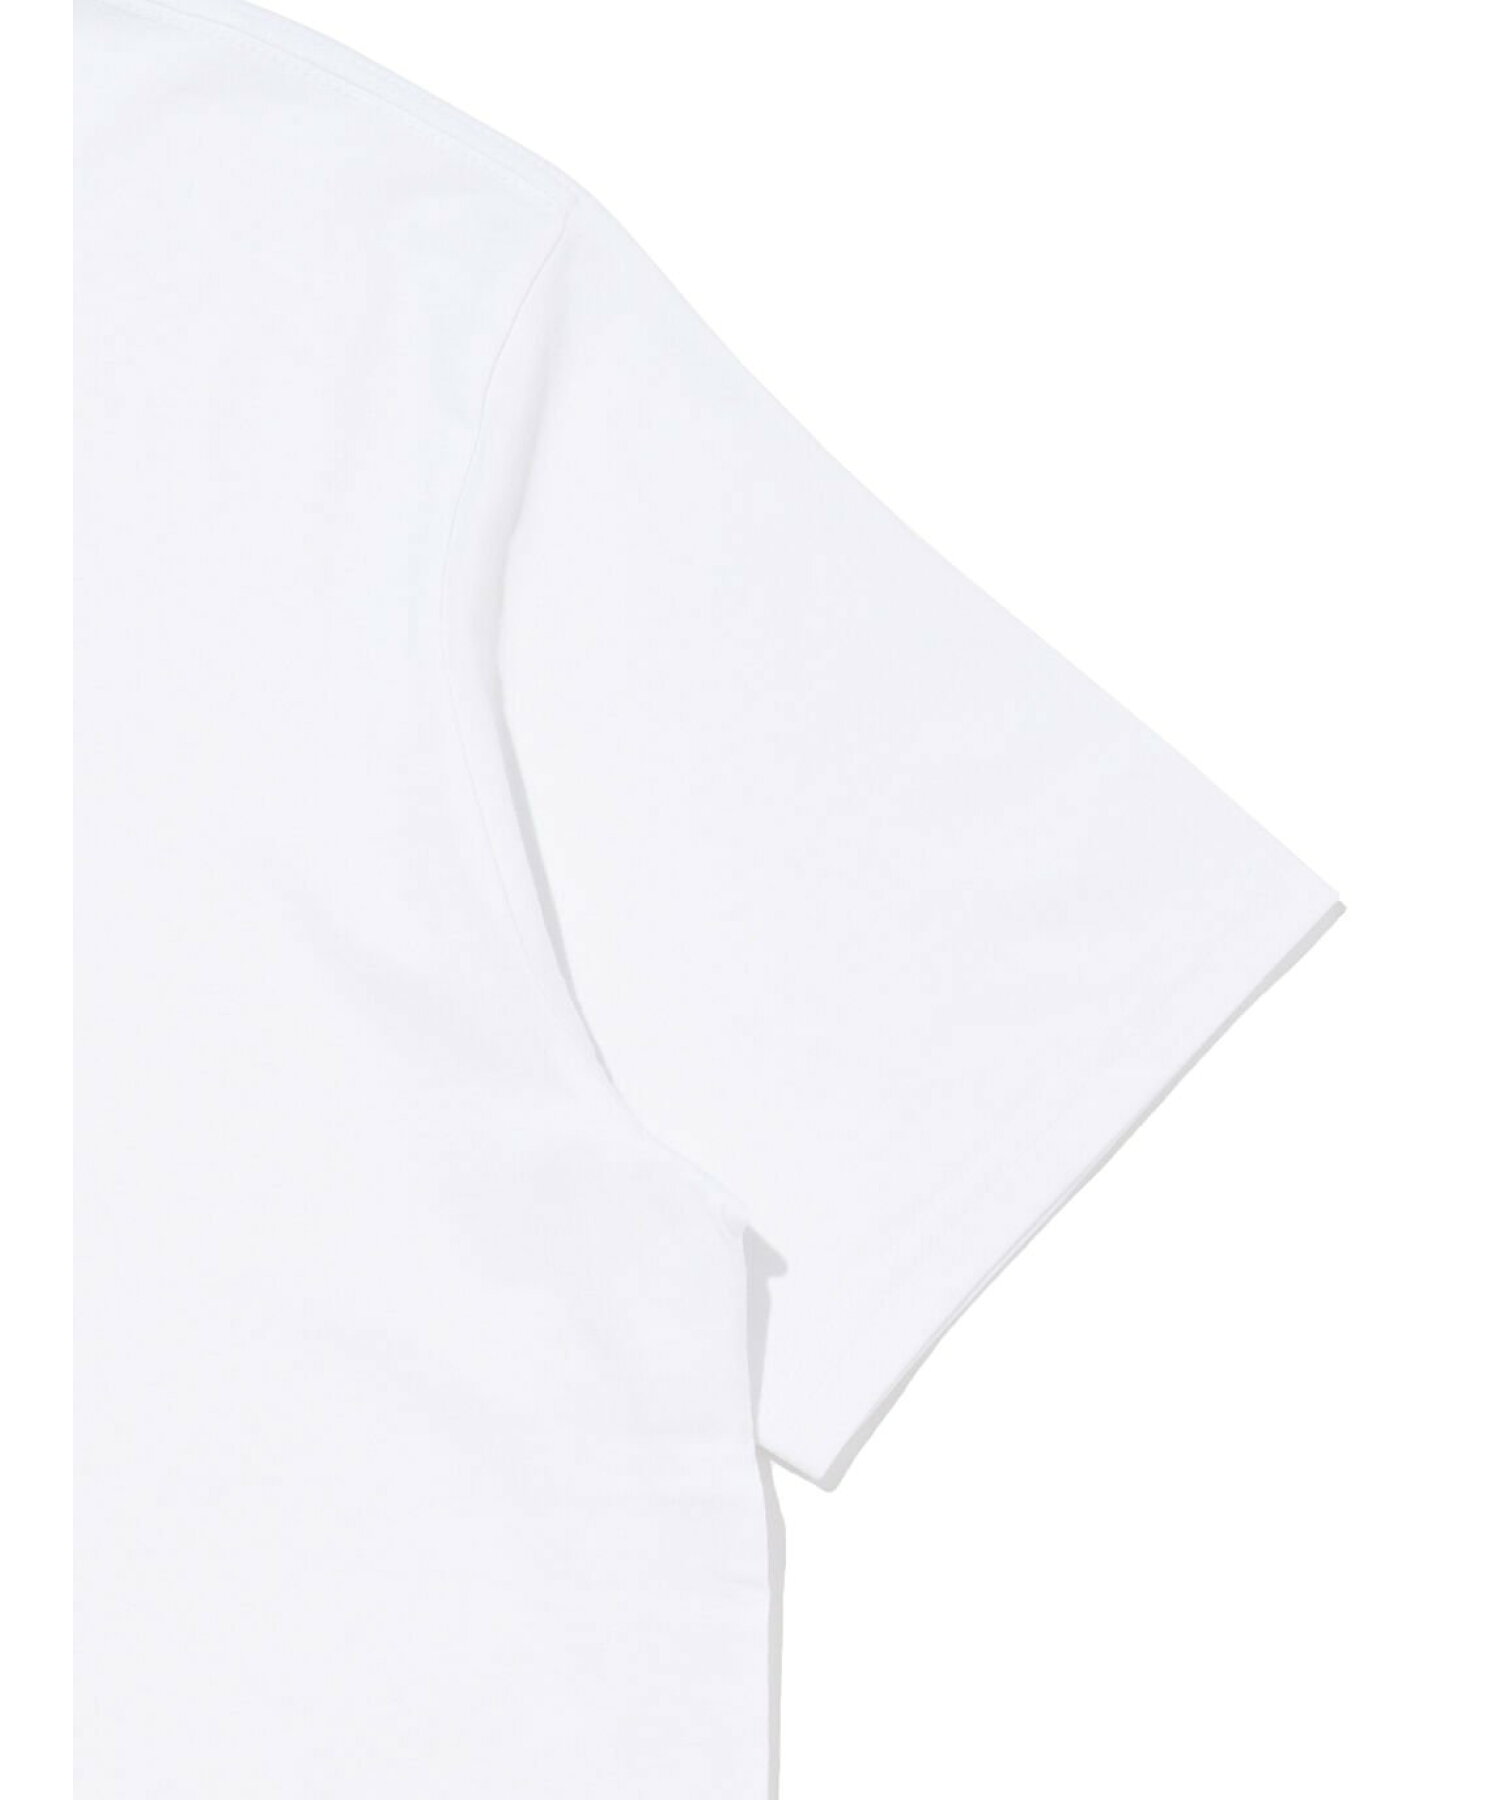 SILVERTABTM リラックスフィット Tシャツ ホワイト SPACESHIP